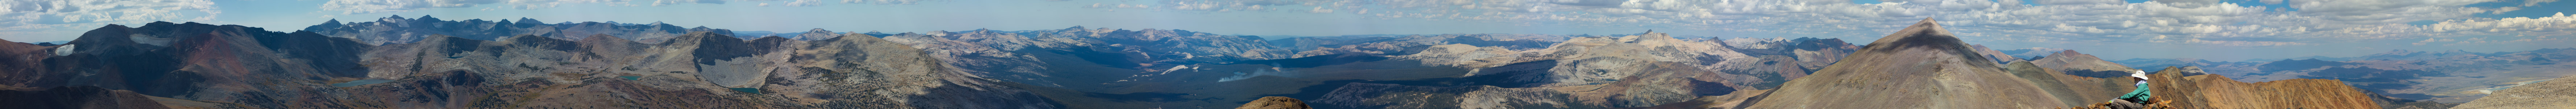 Mount Gibbs Panorama 3 - 9/2014